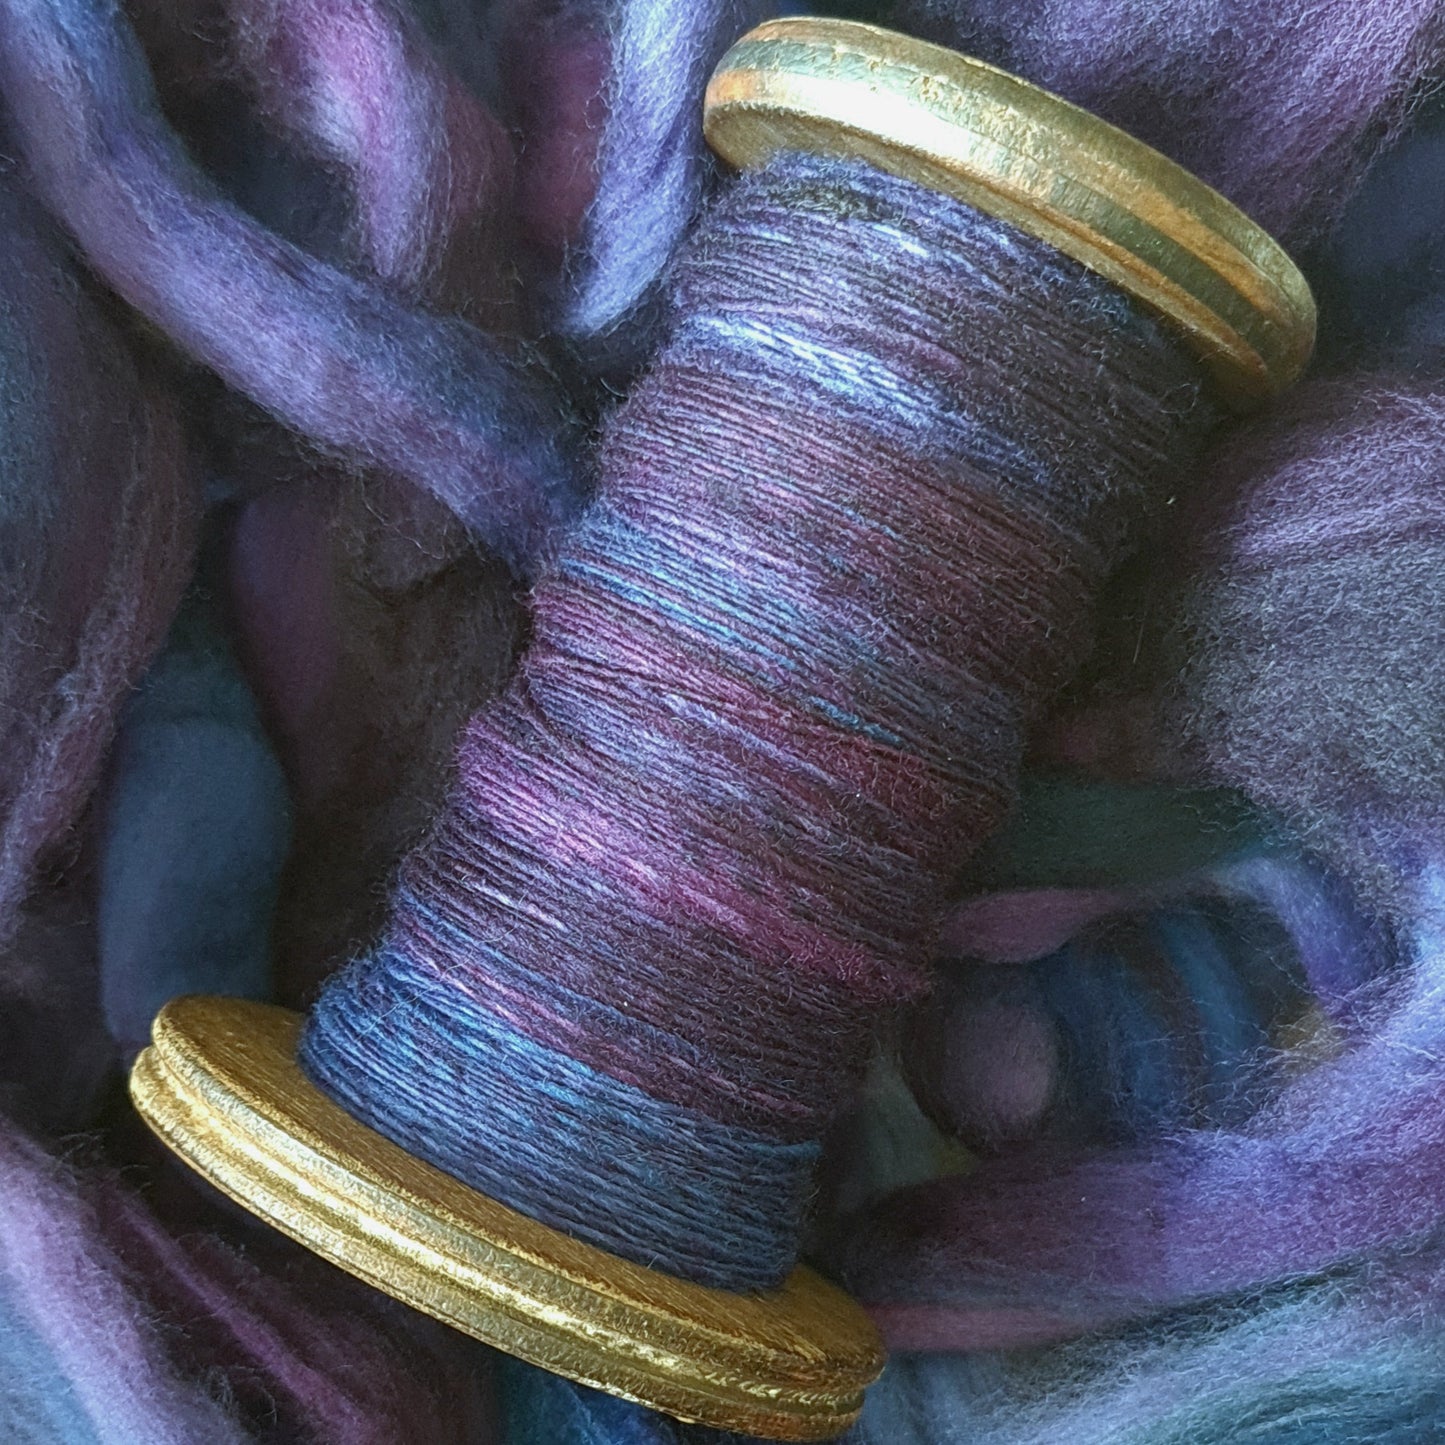 Handspun Worsted/Aran yarn, 124g skein, Kettle dyed Merino Wool, Twilight Purple OOAK